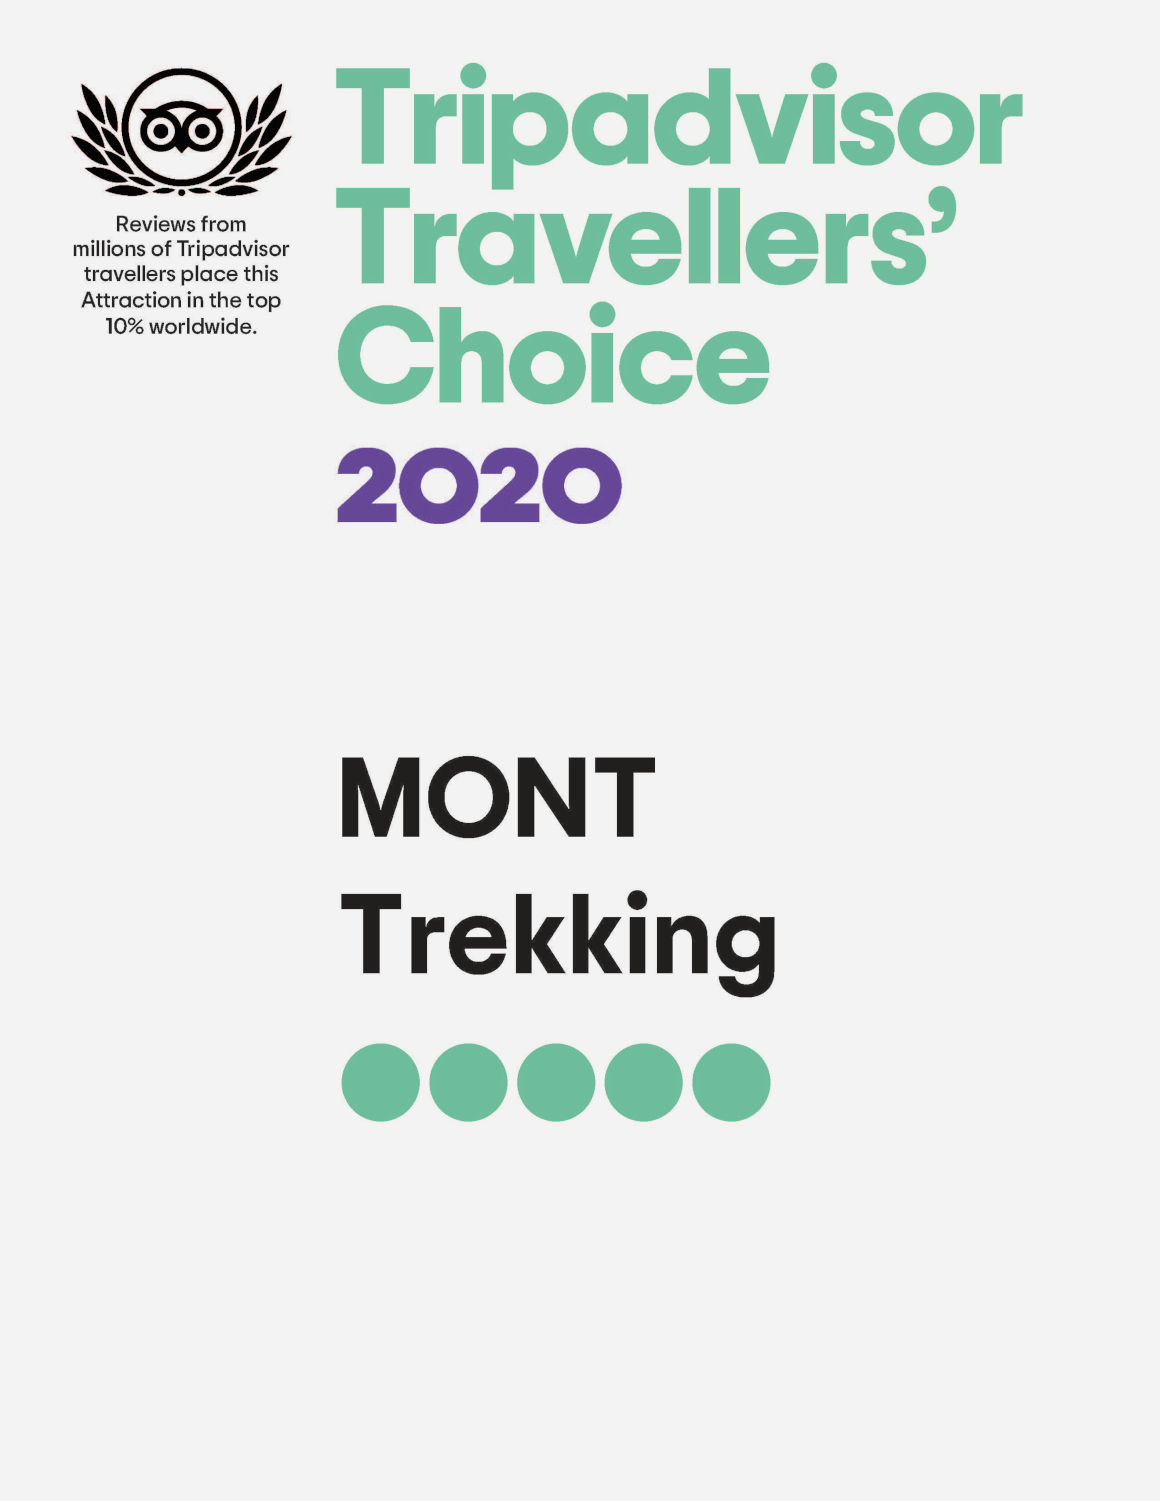 MONT Trekking TripAdvisor Traveler's Choice 2020